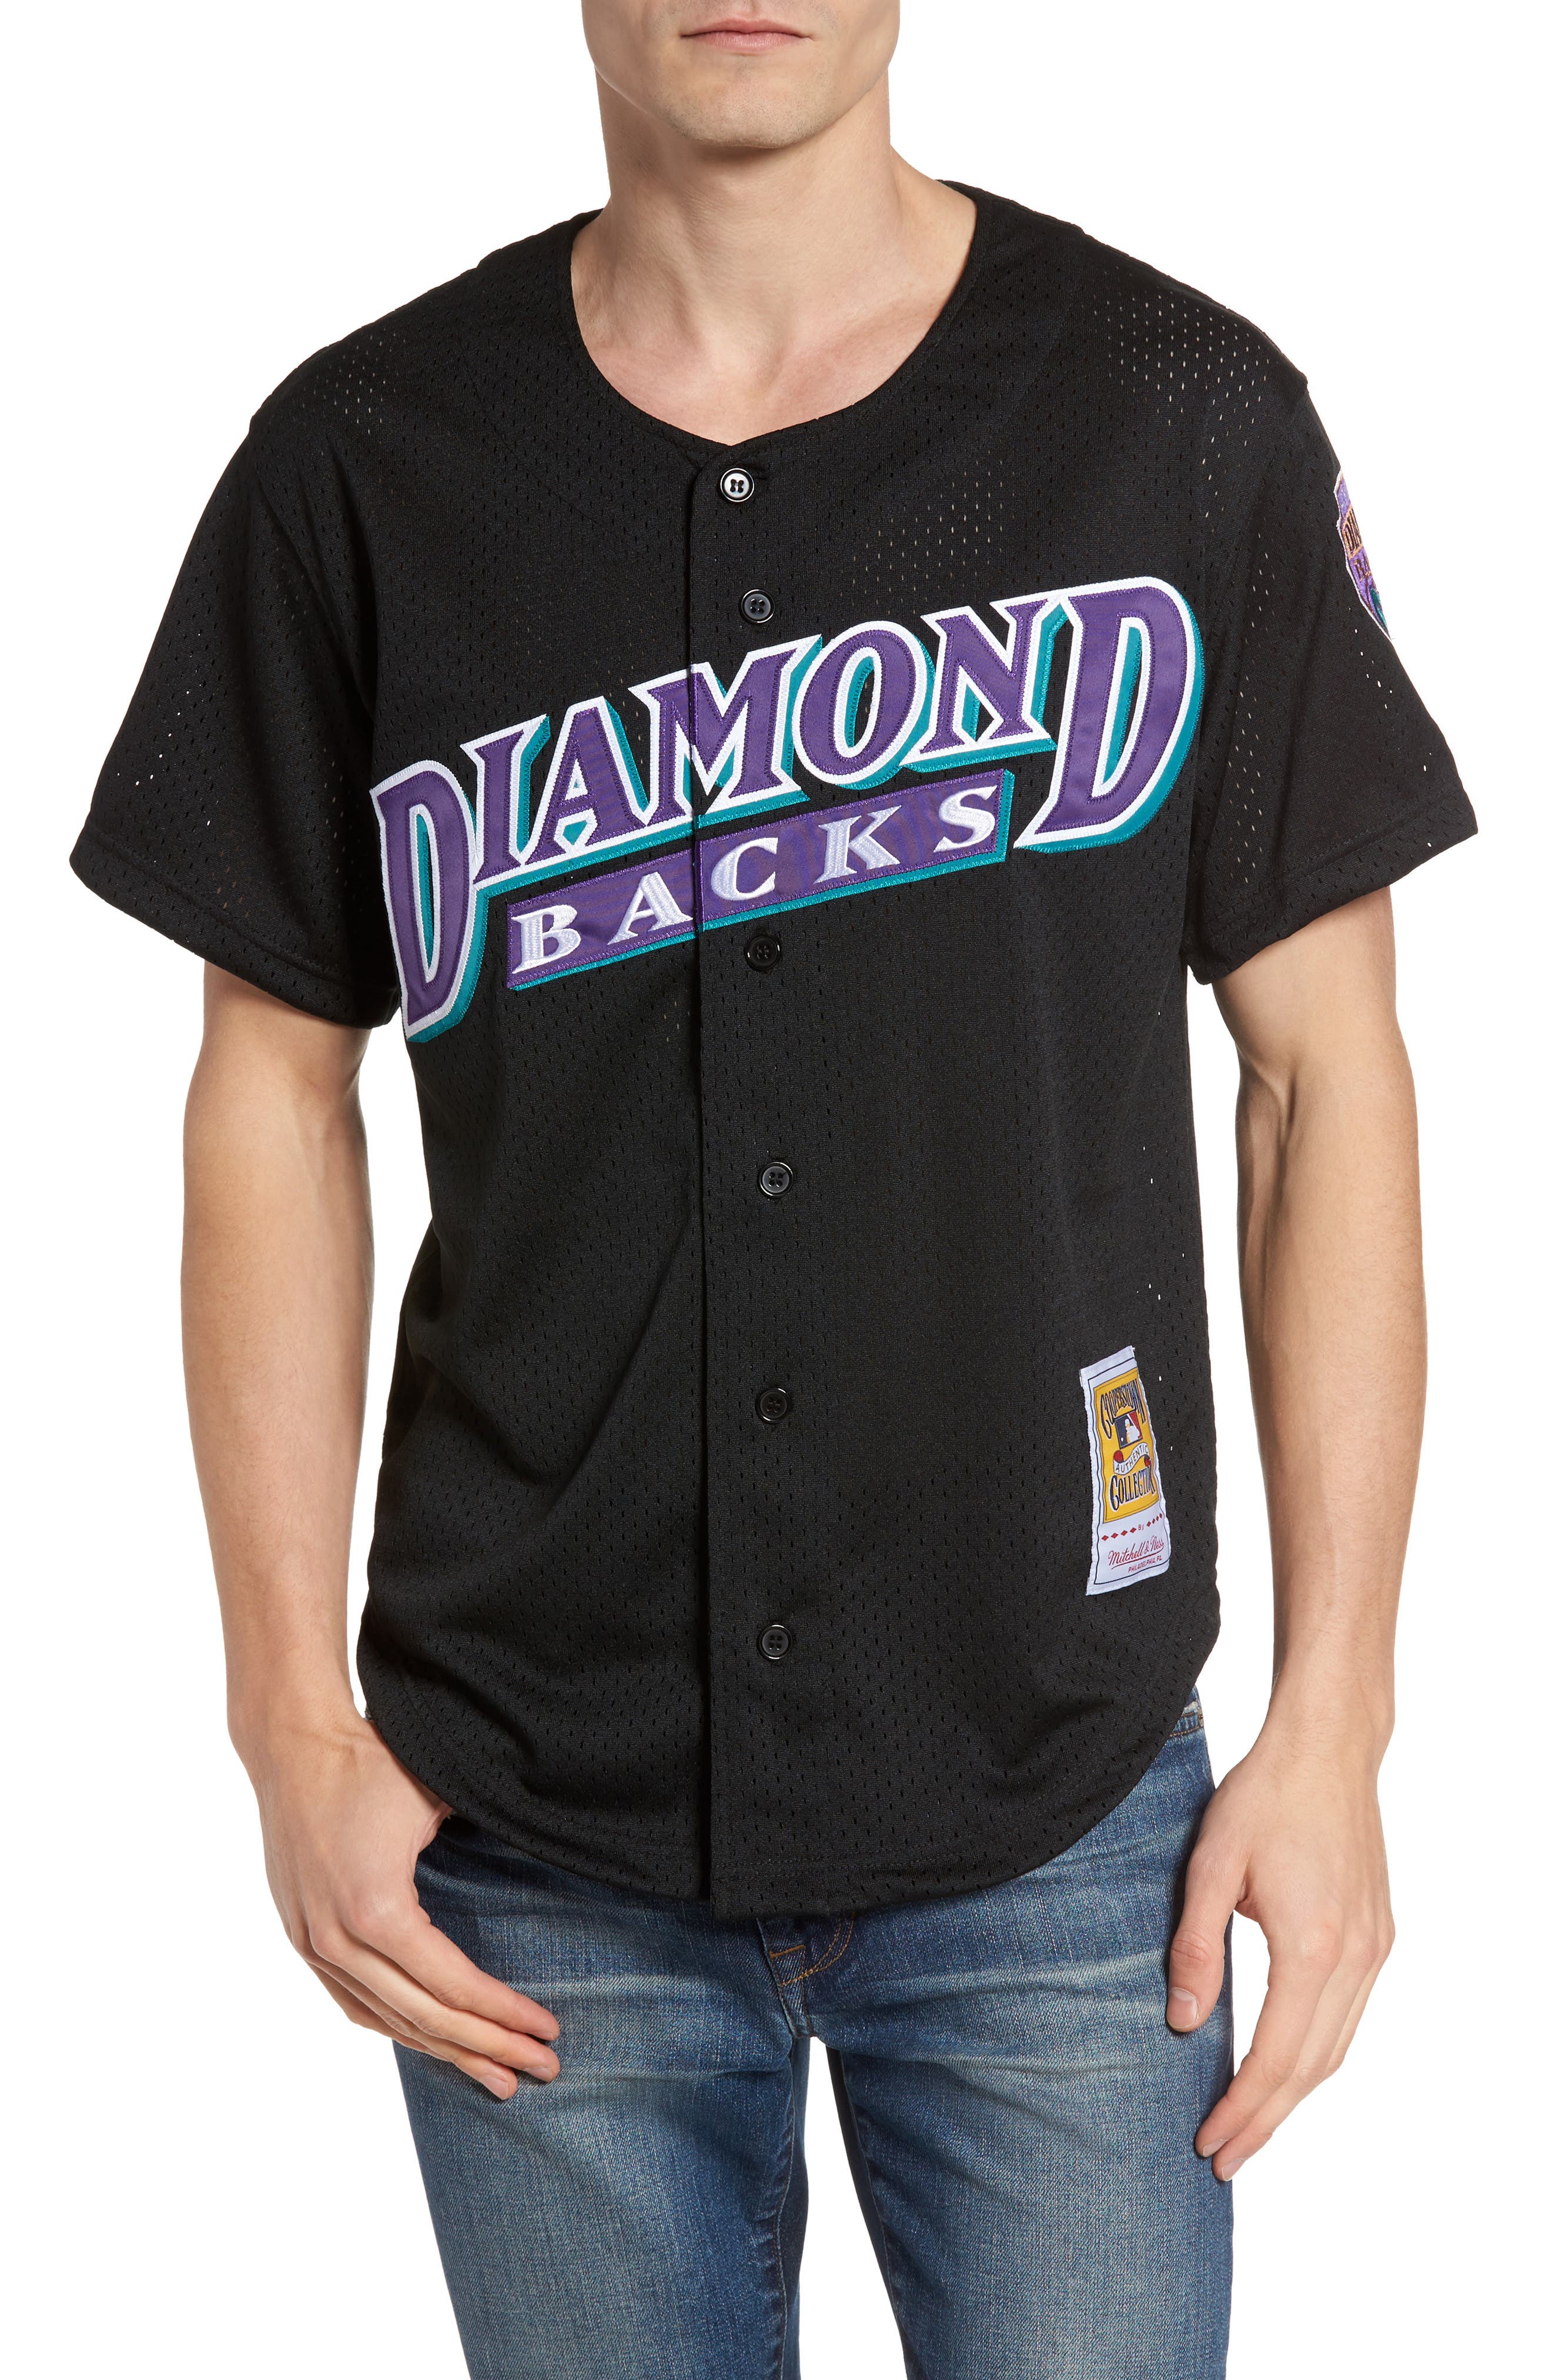 randy johnson diamondbacks jersey